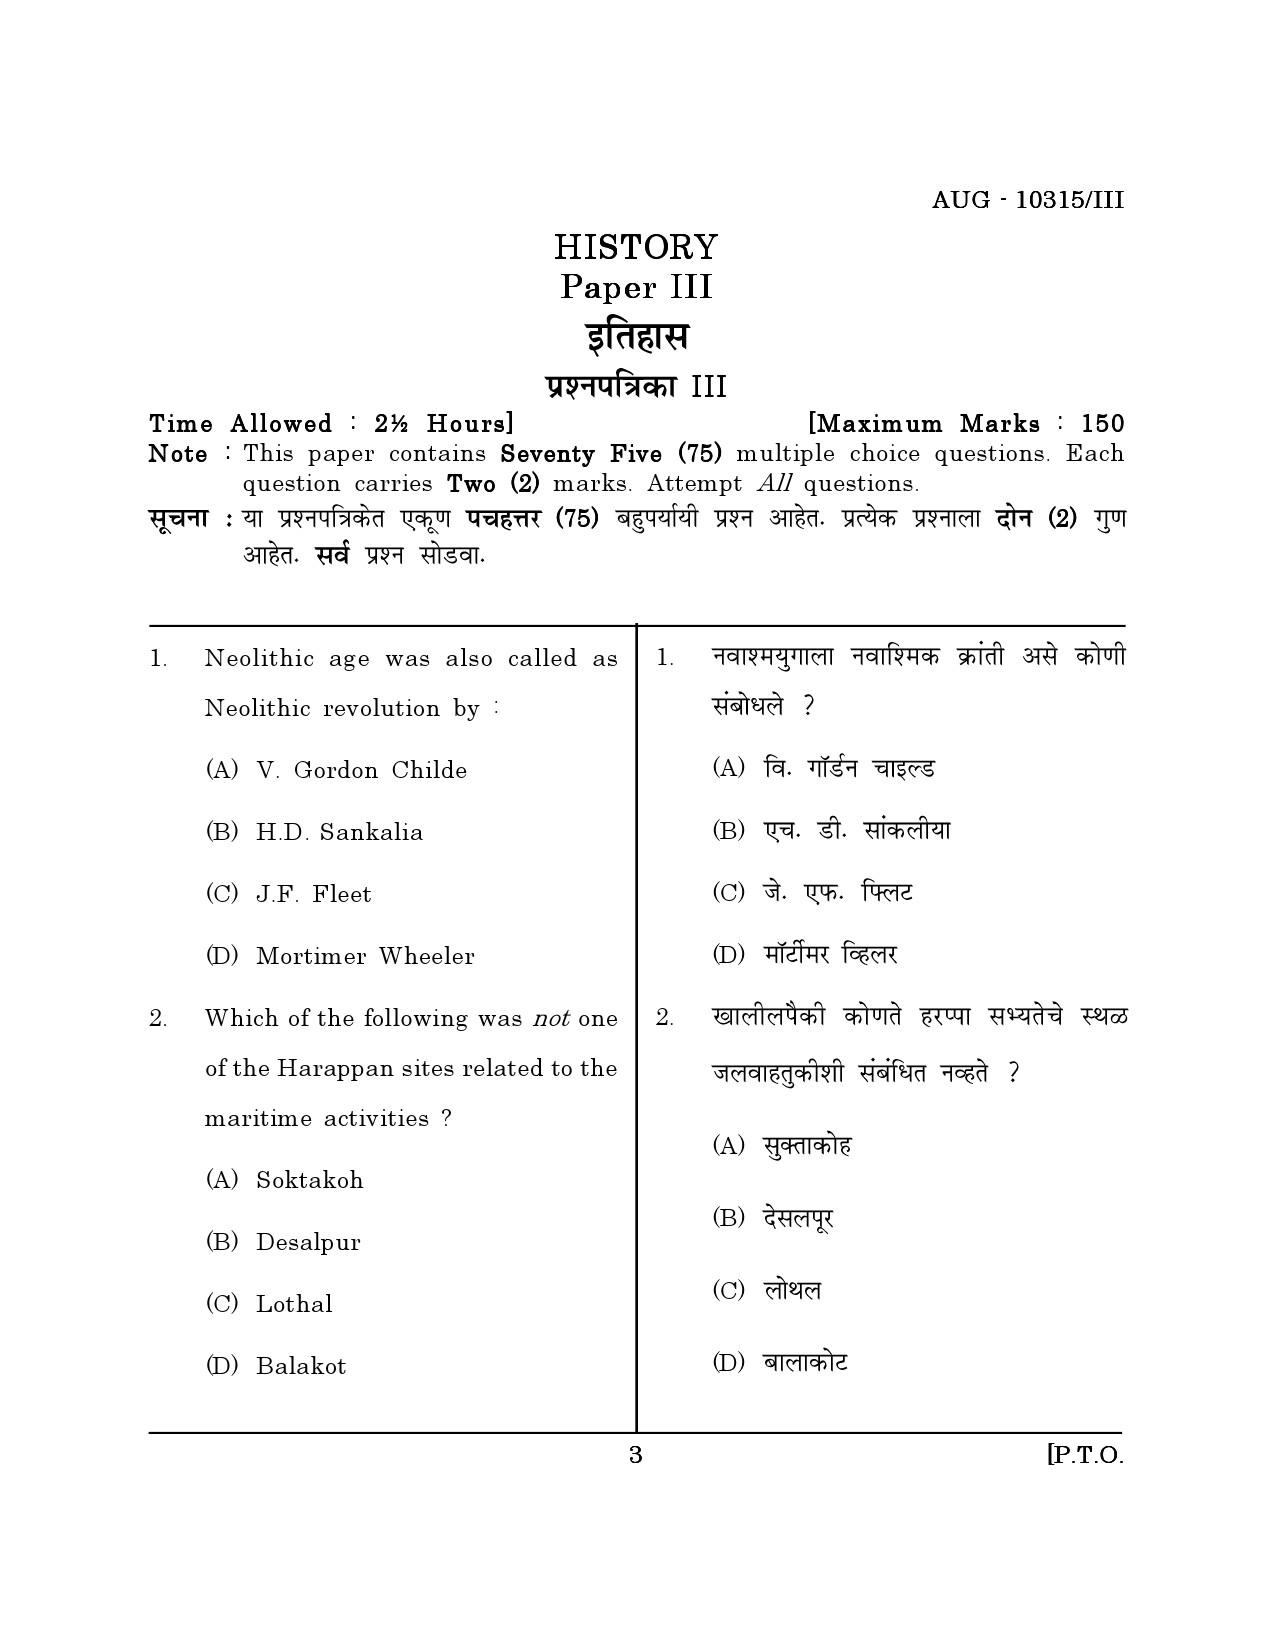 Maharashtra SET History Question Paper III August 2015 2